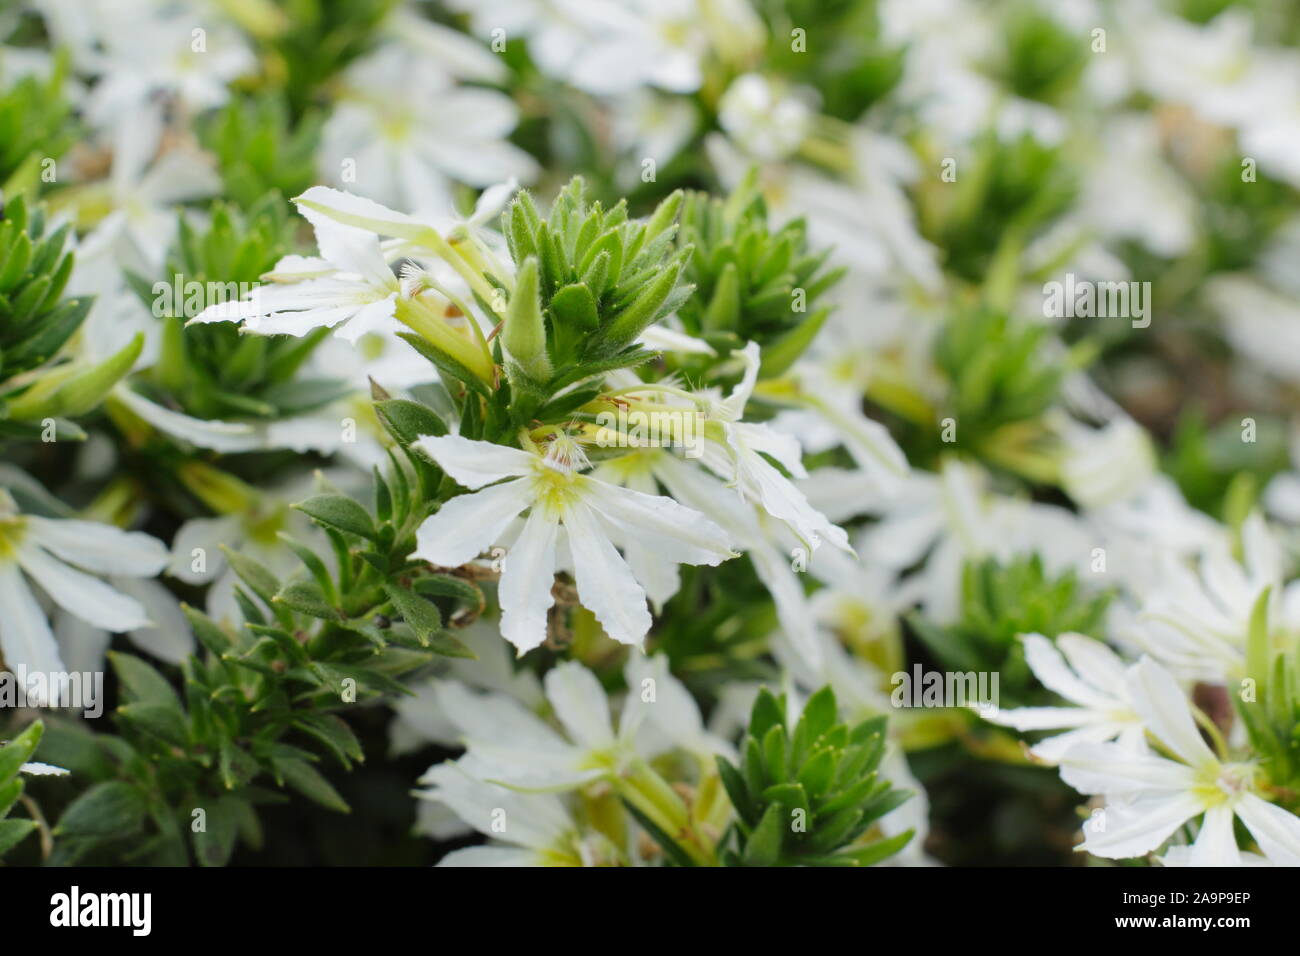 Scaevola aemula 'Abanico White' flowering in a hanging basket in summer Stock Photo